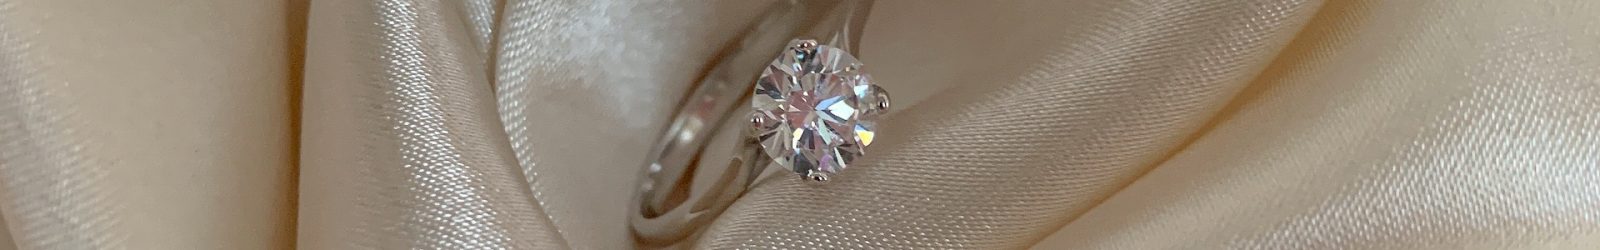 MJG Gabel Diamond Jewelry Buying and Auctioning